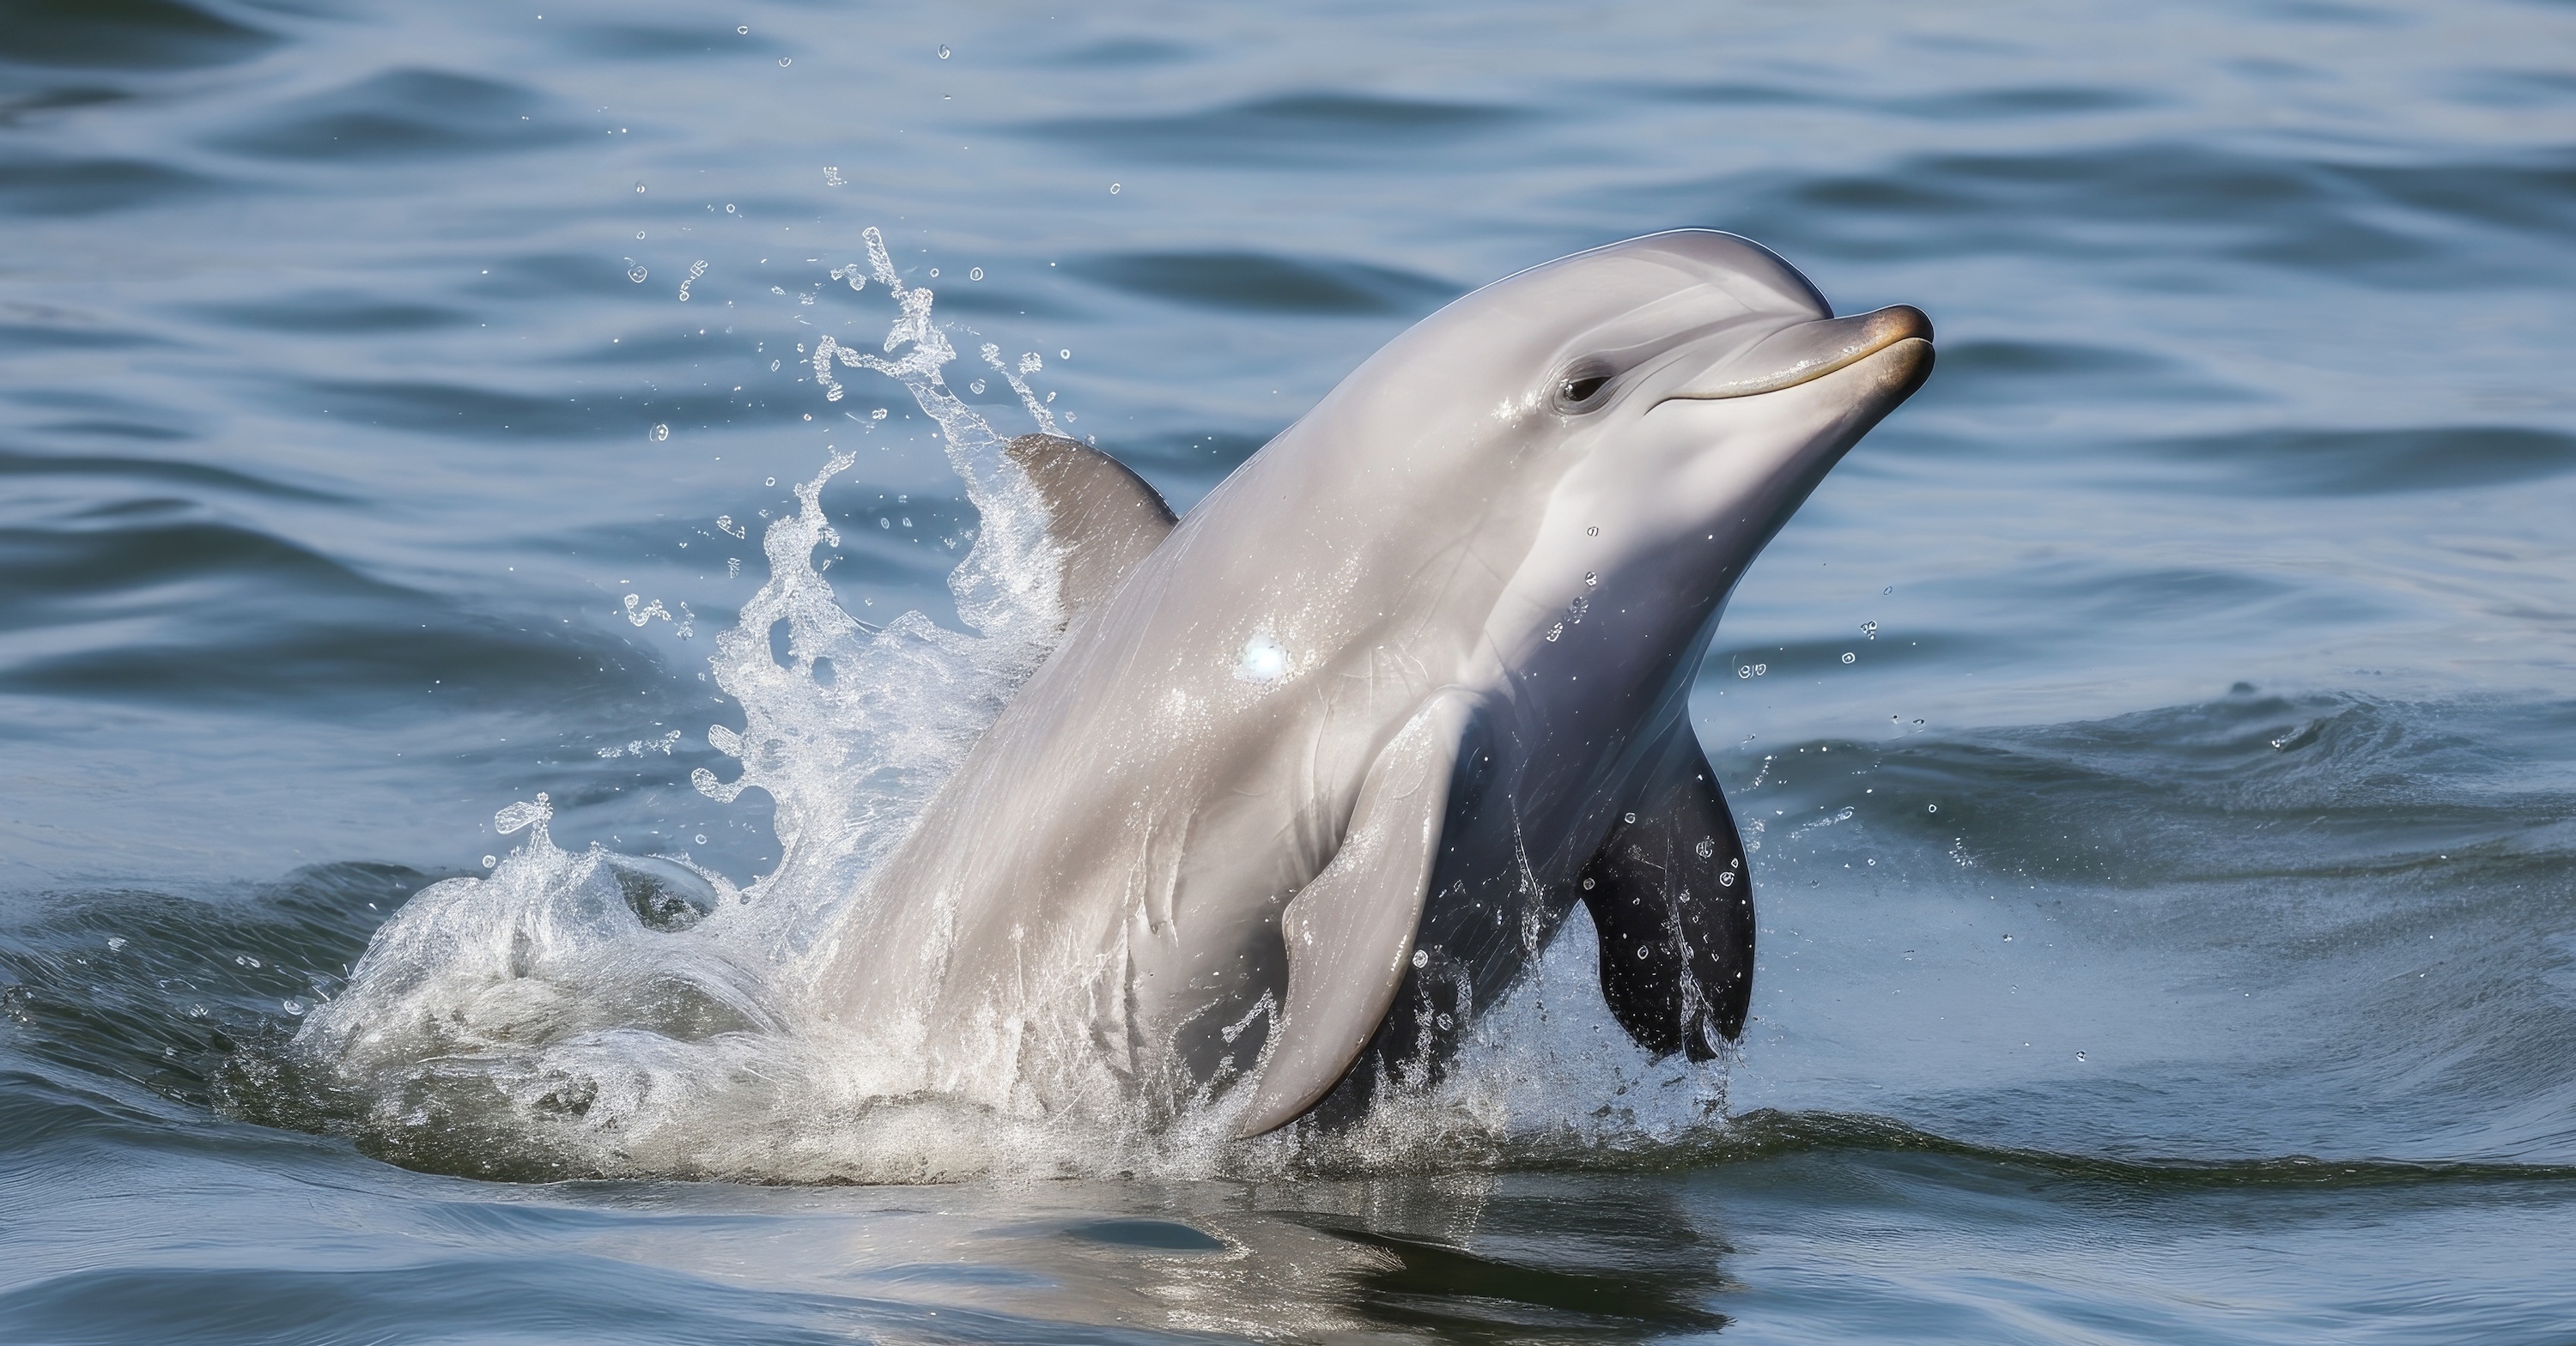 Jeune dauphin nageant à la surface de l'eau. © primopiano, Adobe Stock